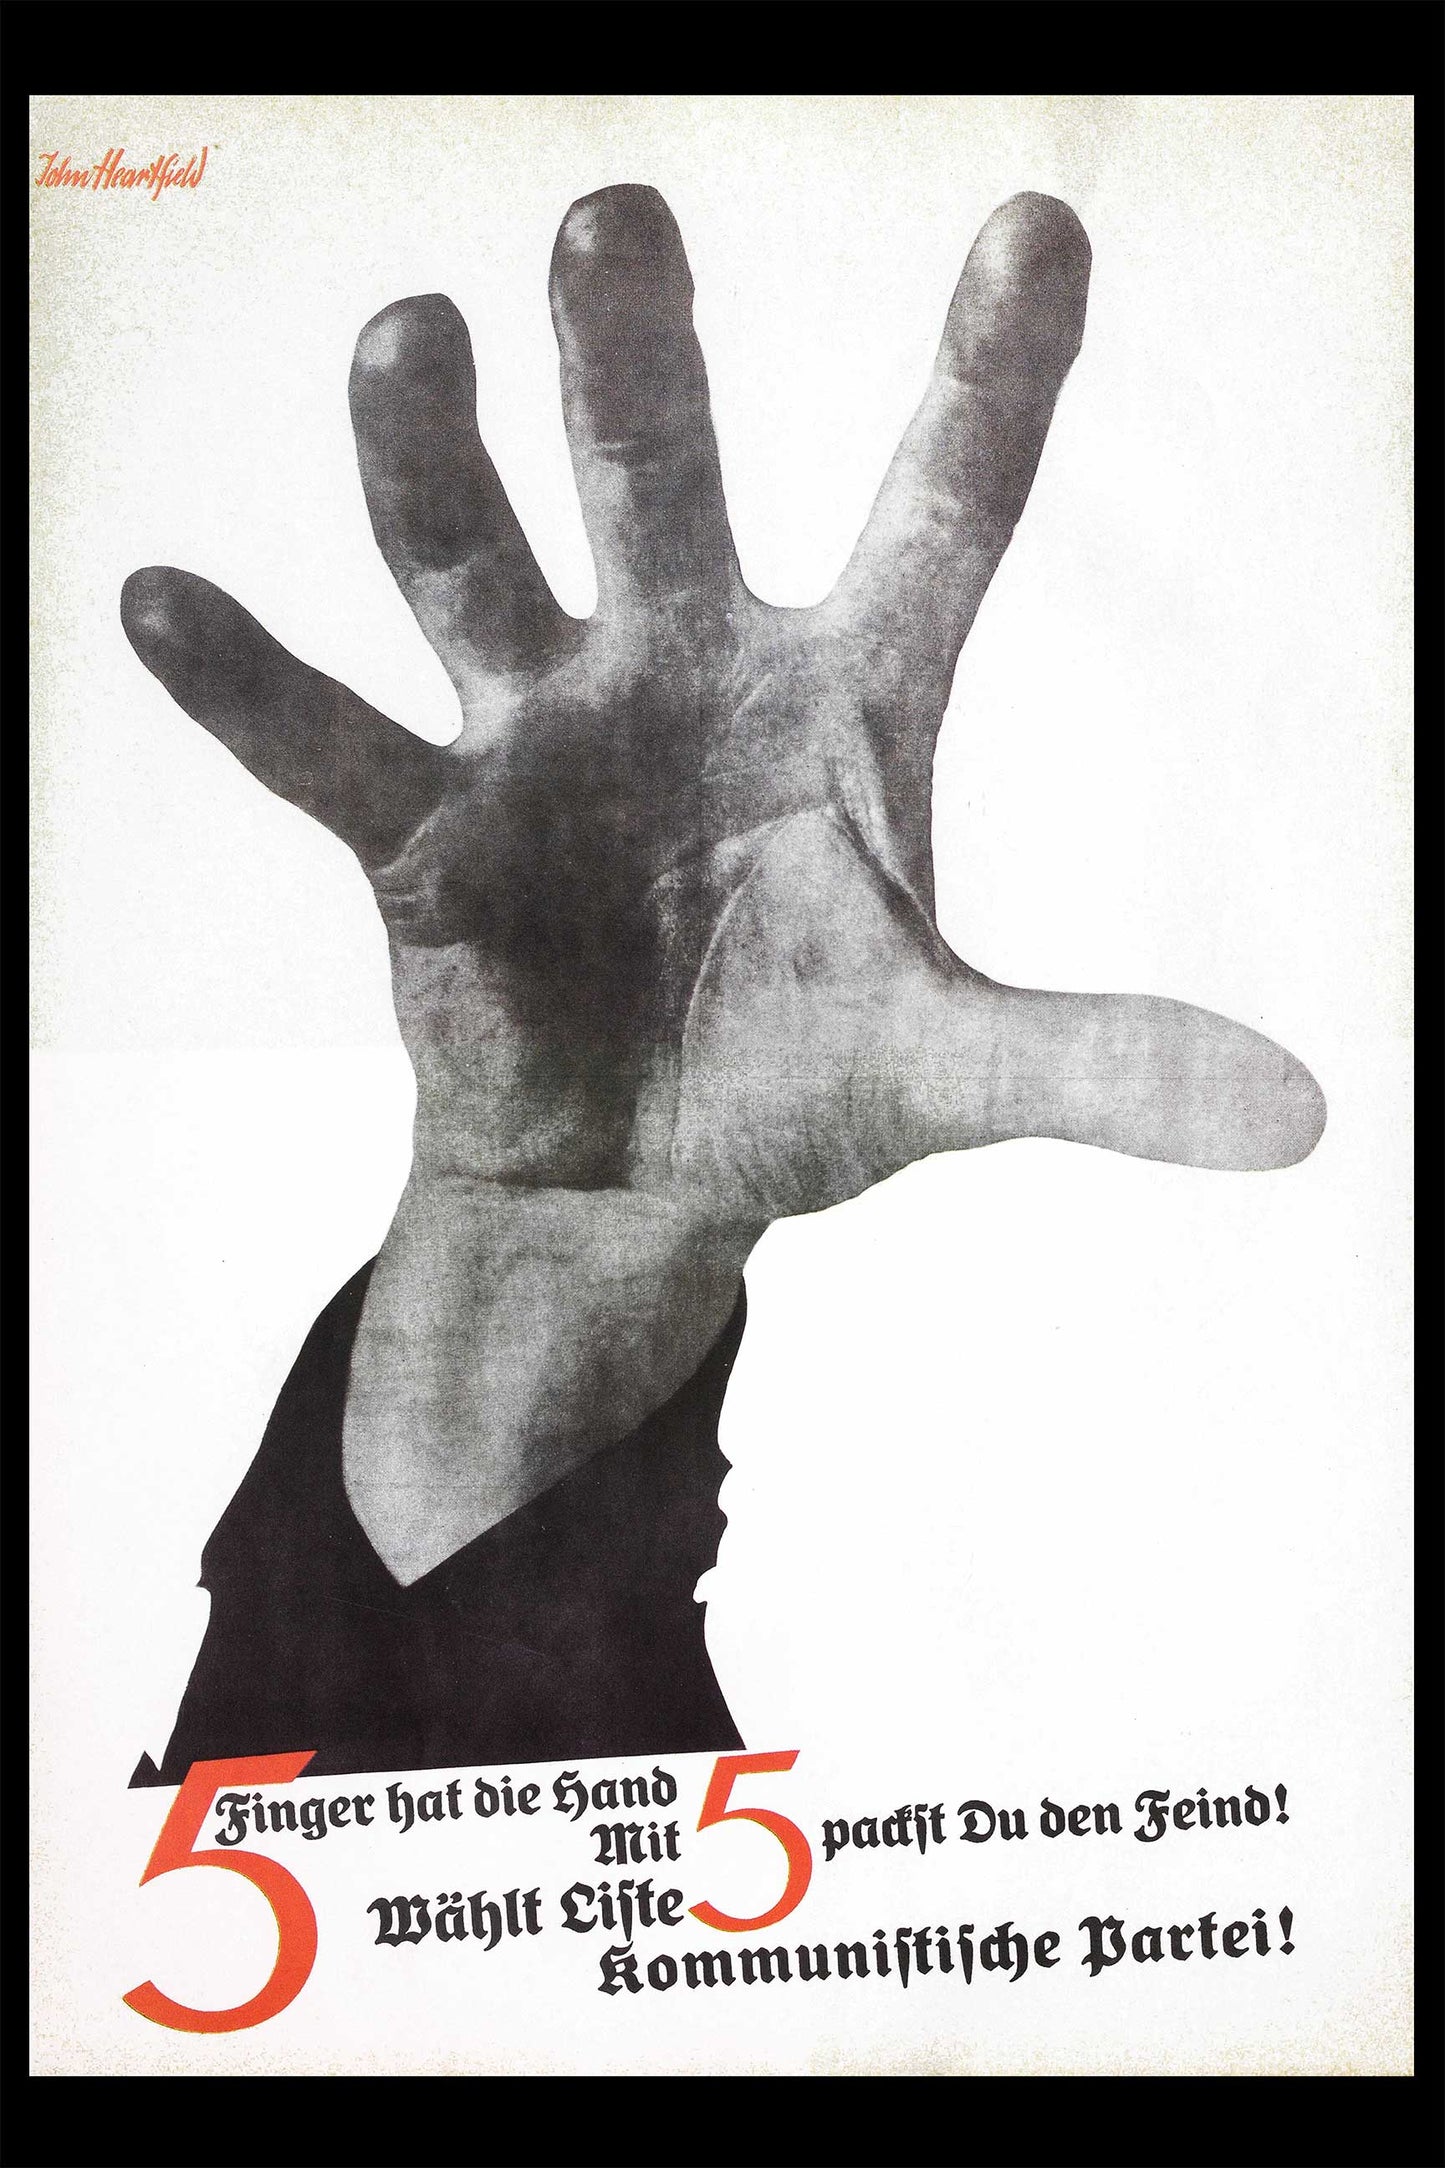 famous political art sale. official  john heartfield five fingers poster.